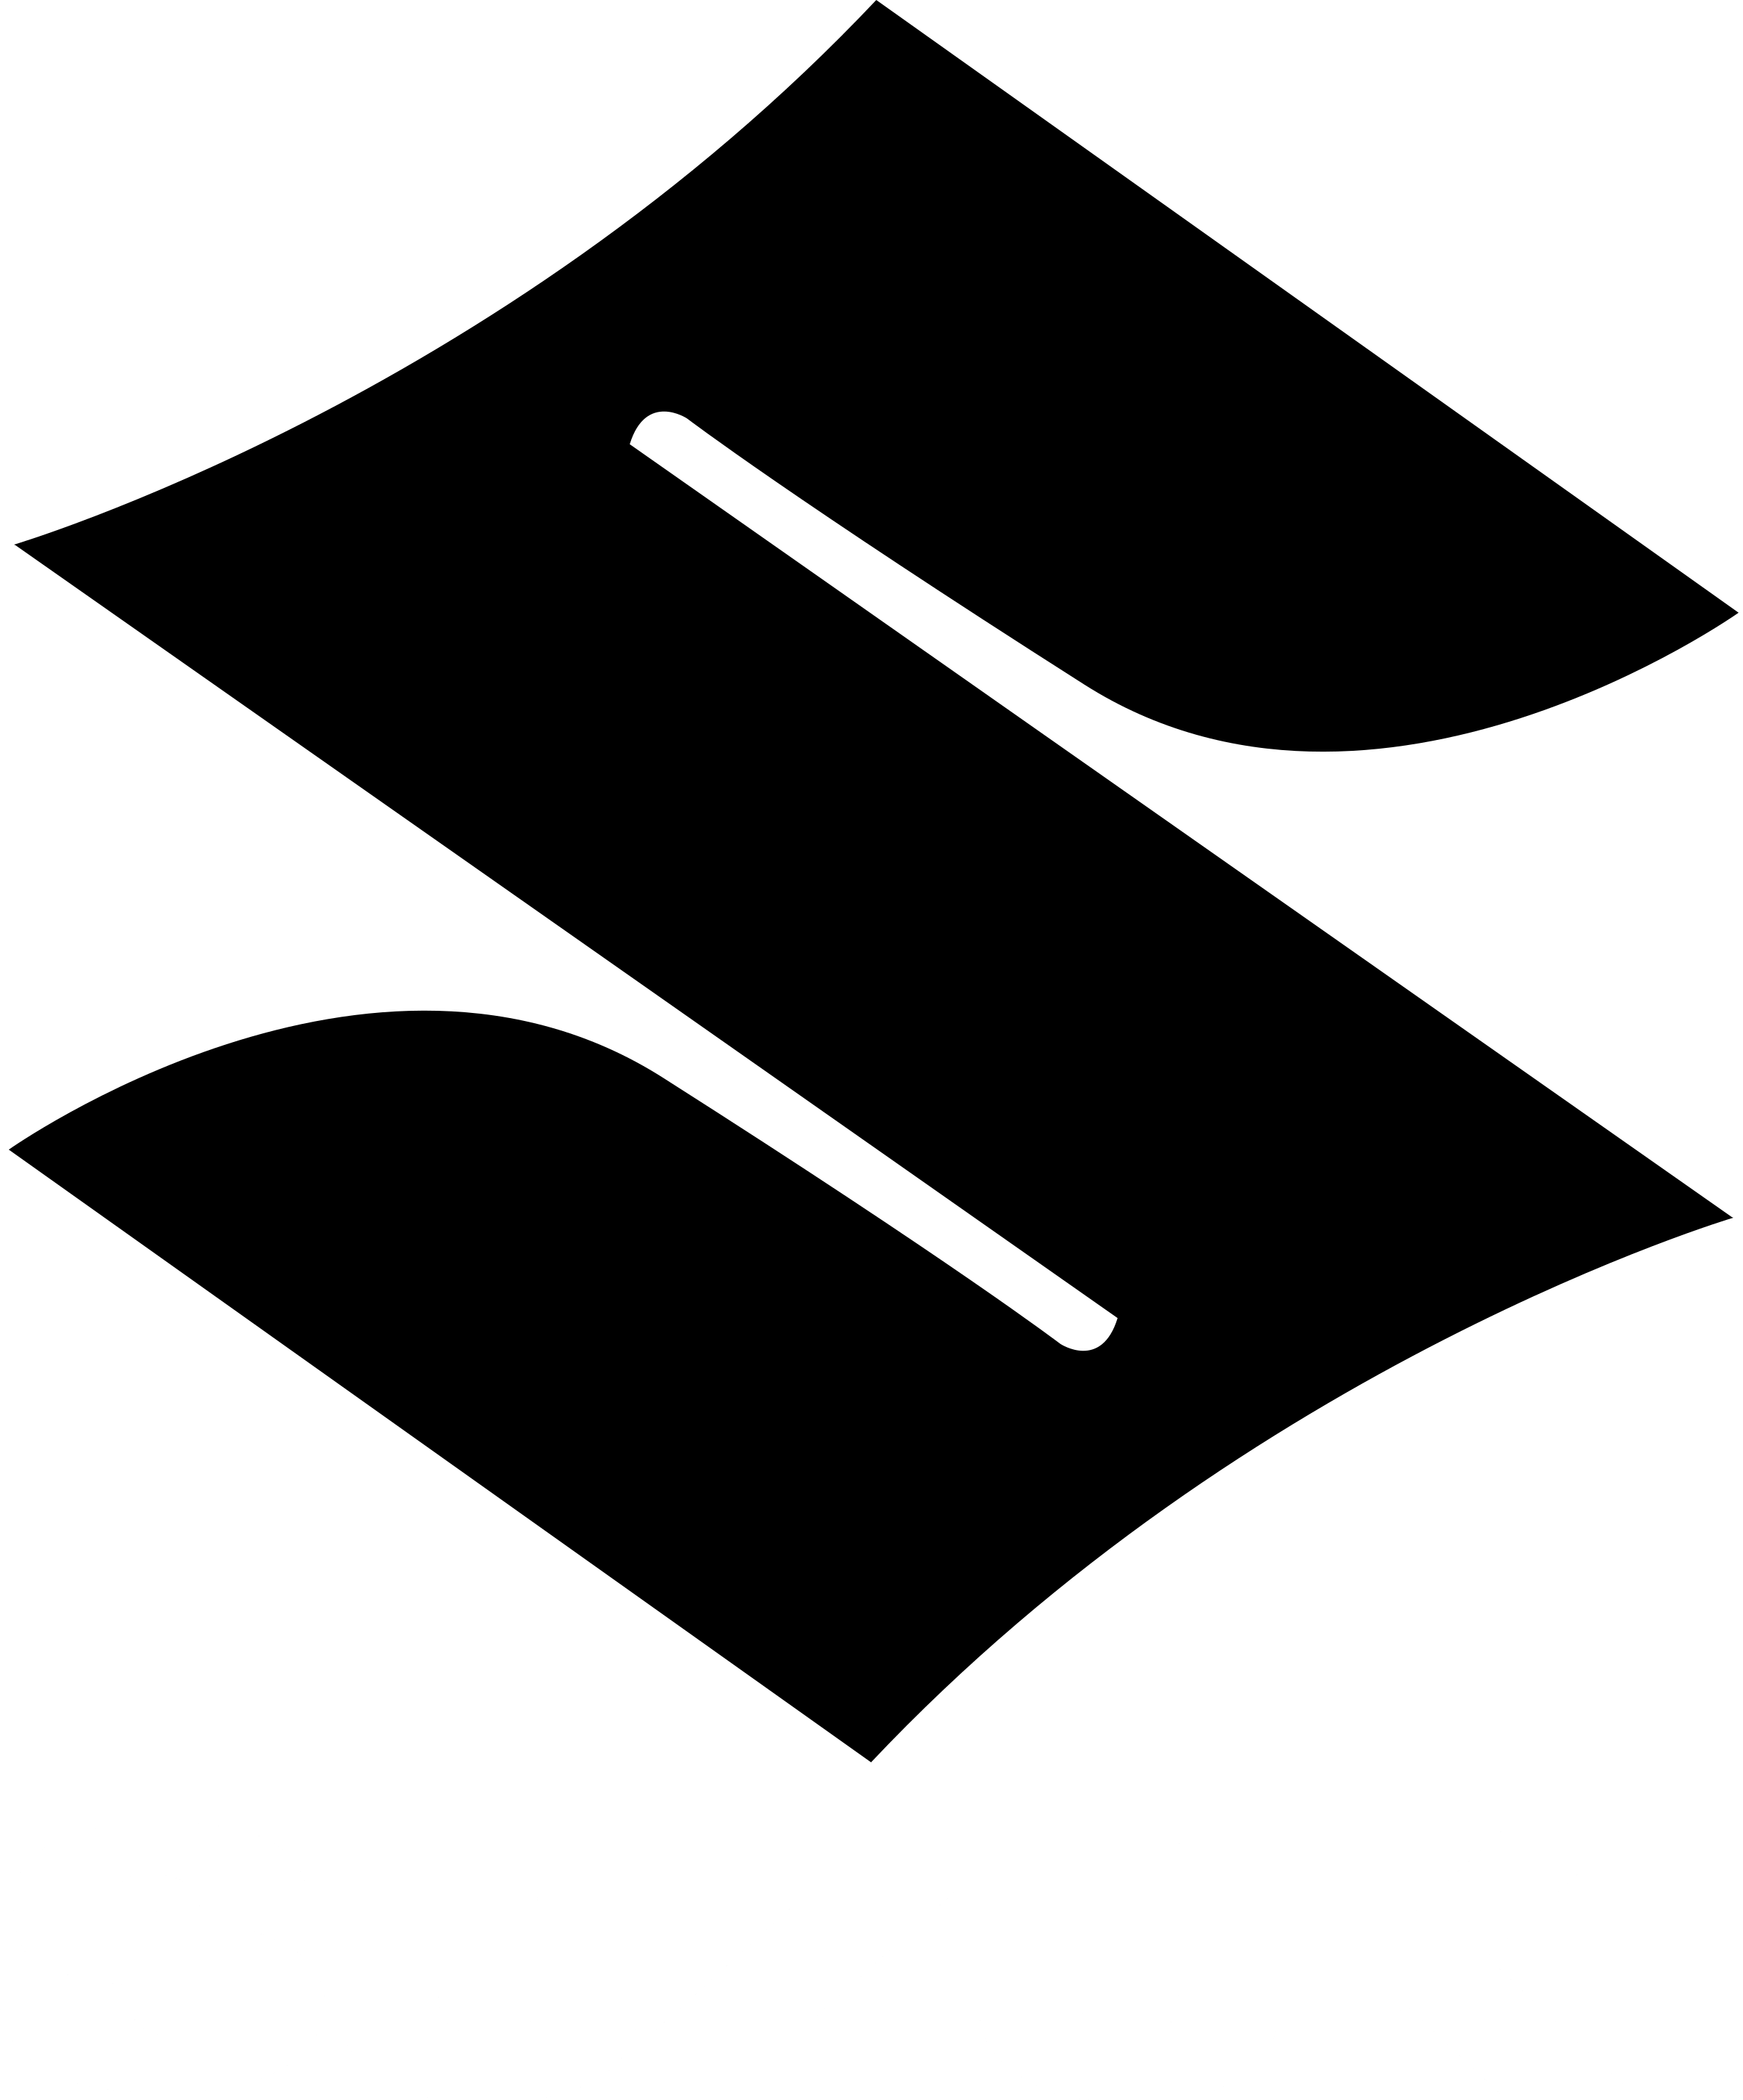 Suzuki Logo Brand Identity